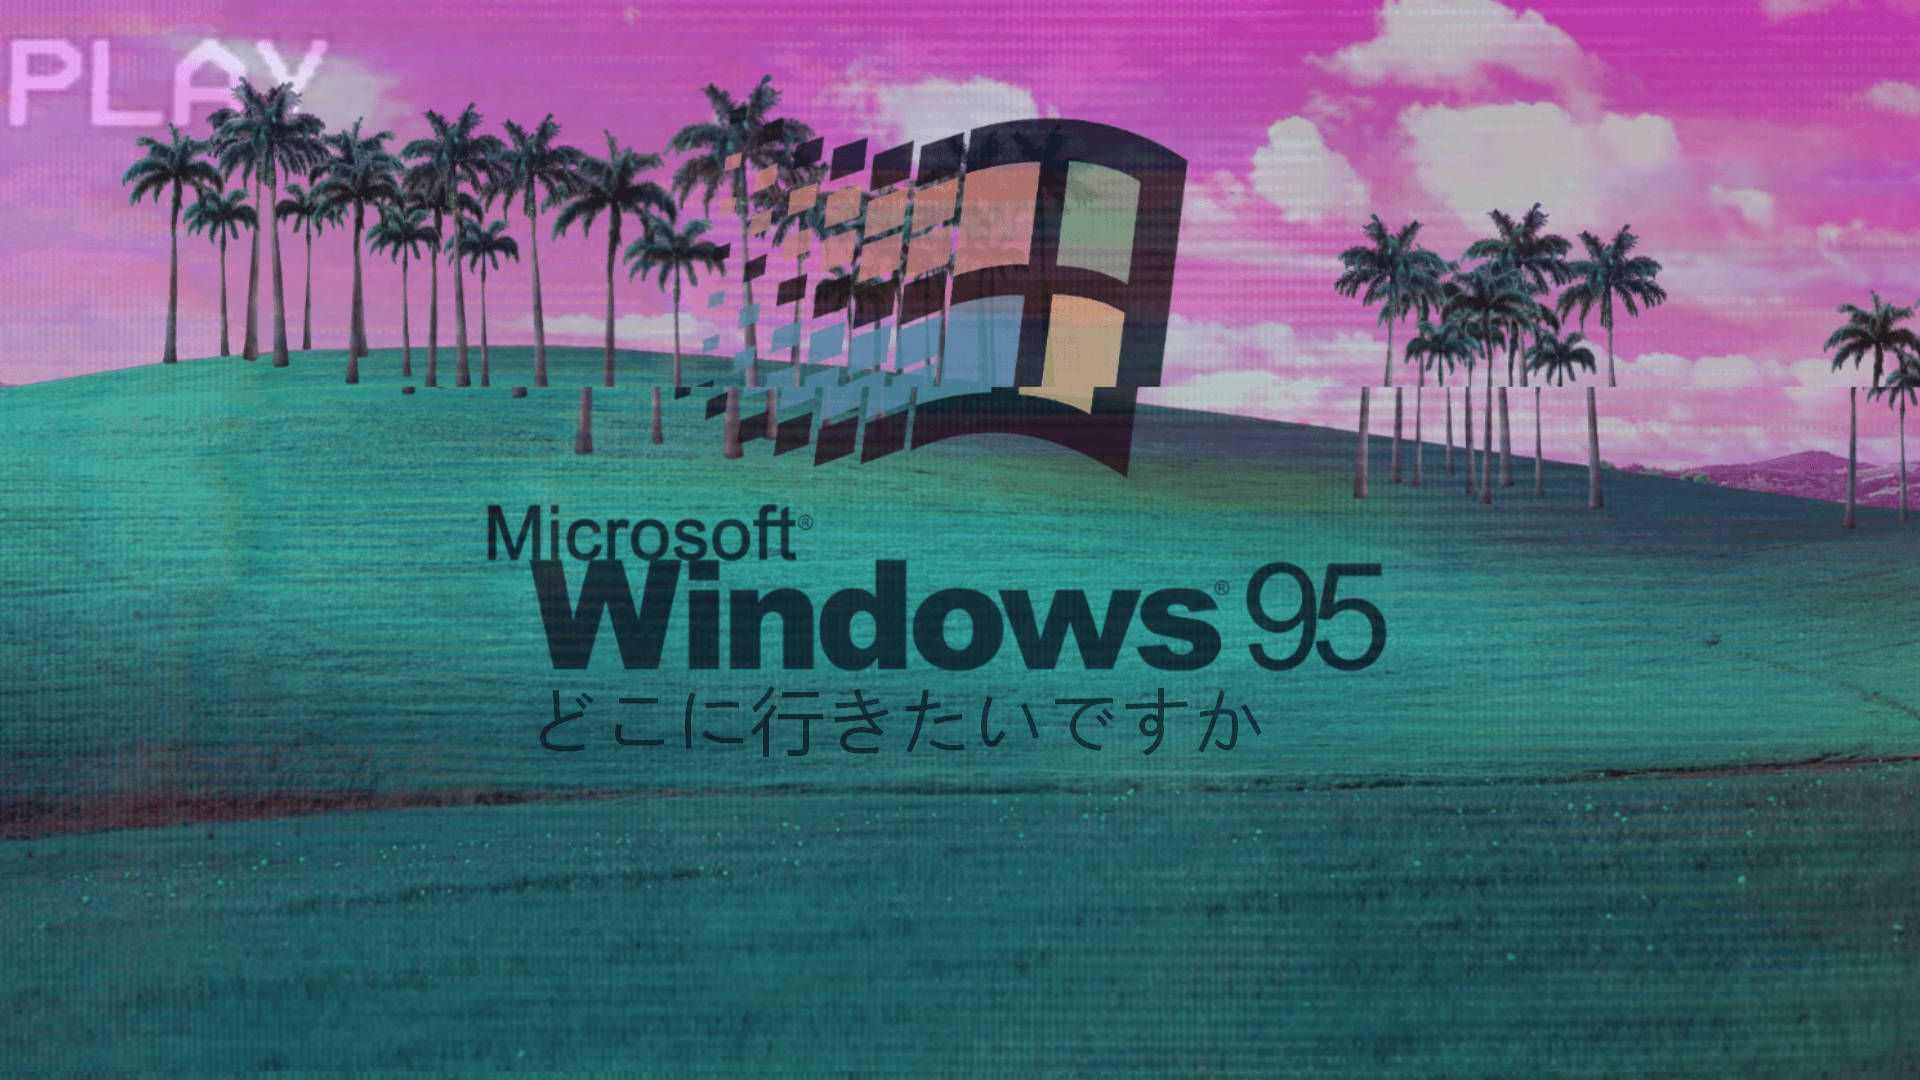 Aesthetic Teal Windows 95 Retrowave Design